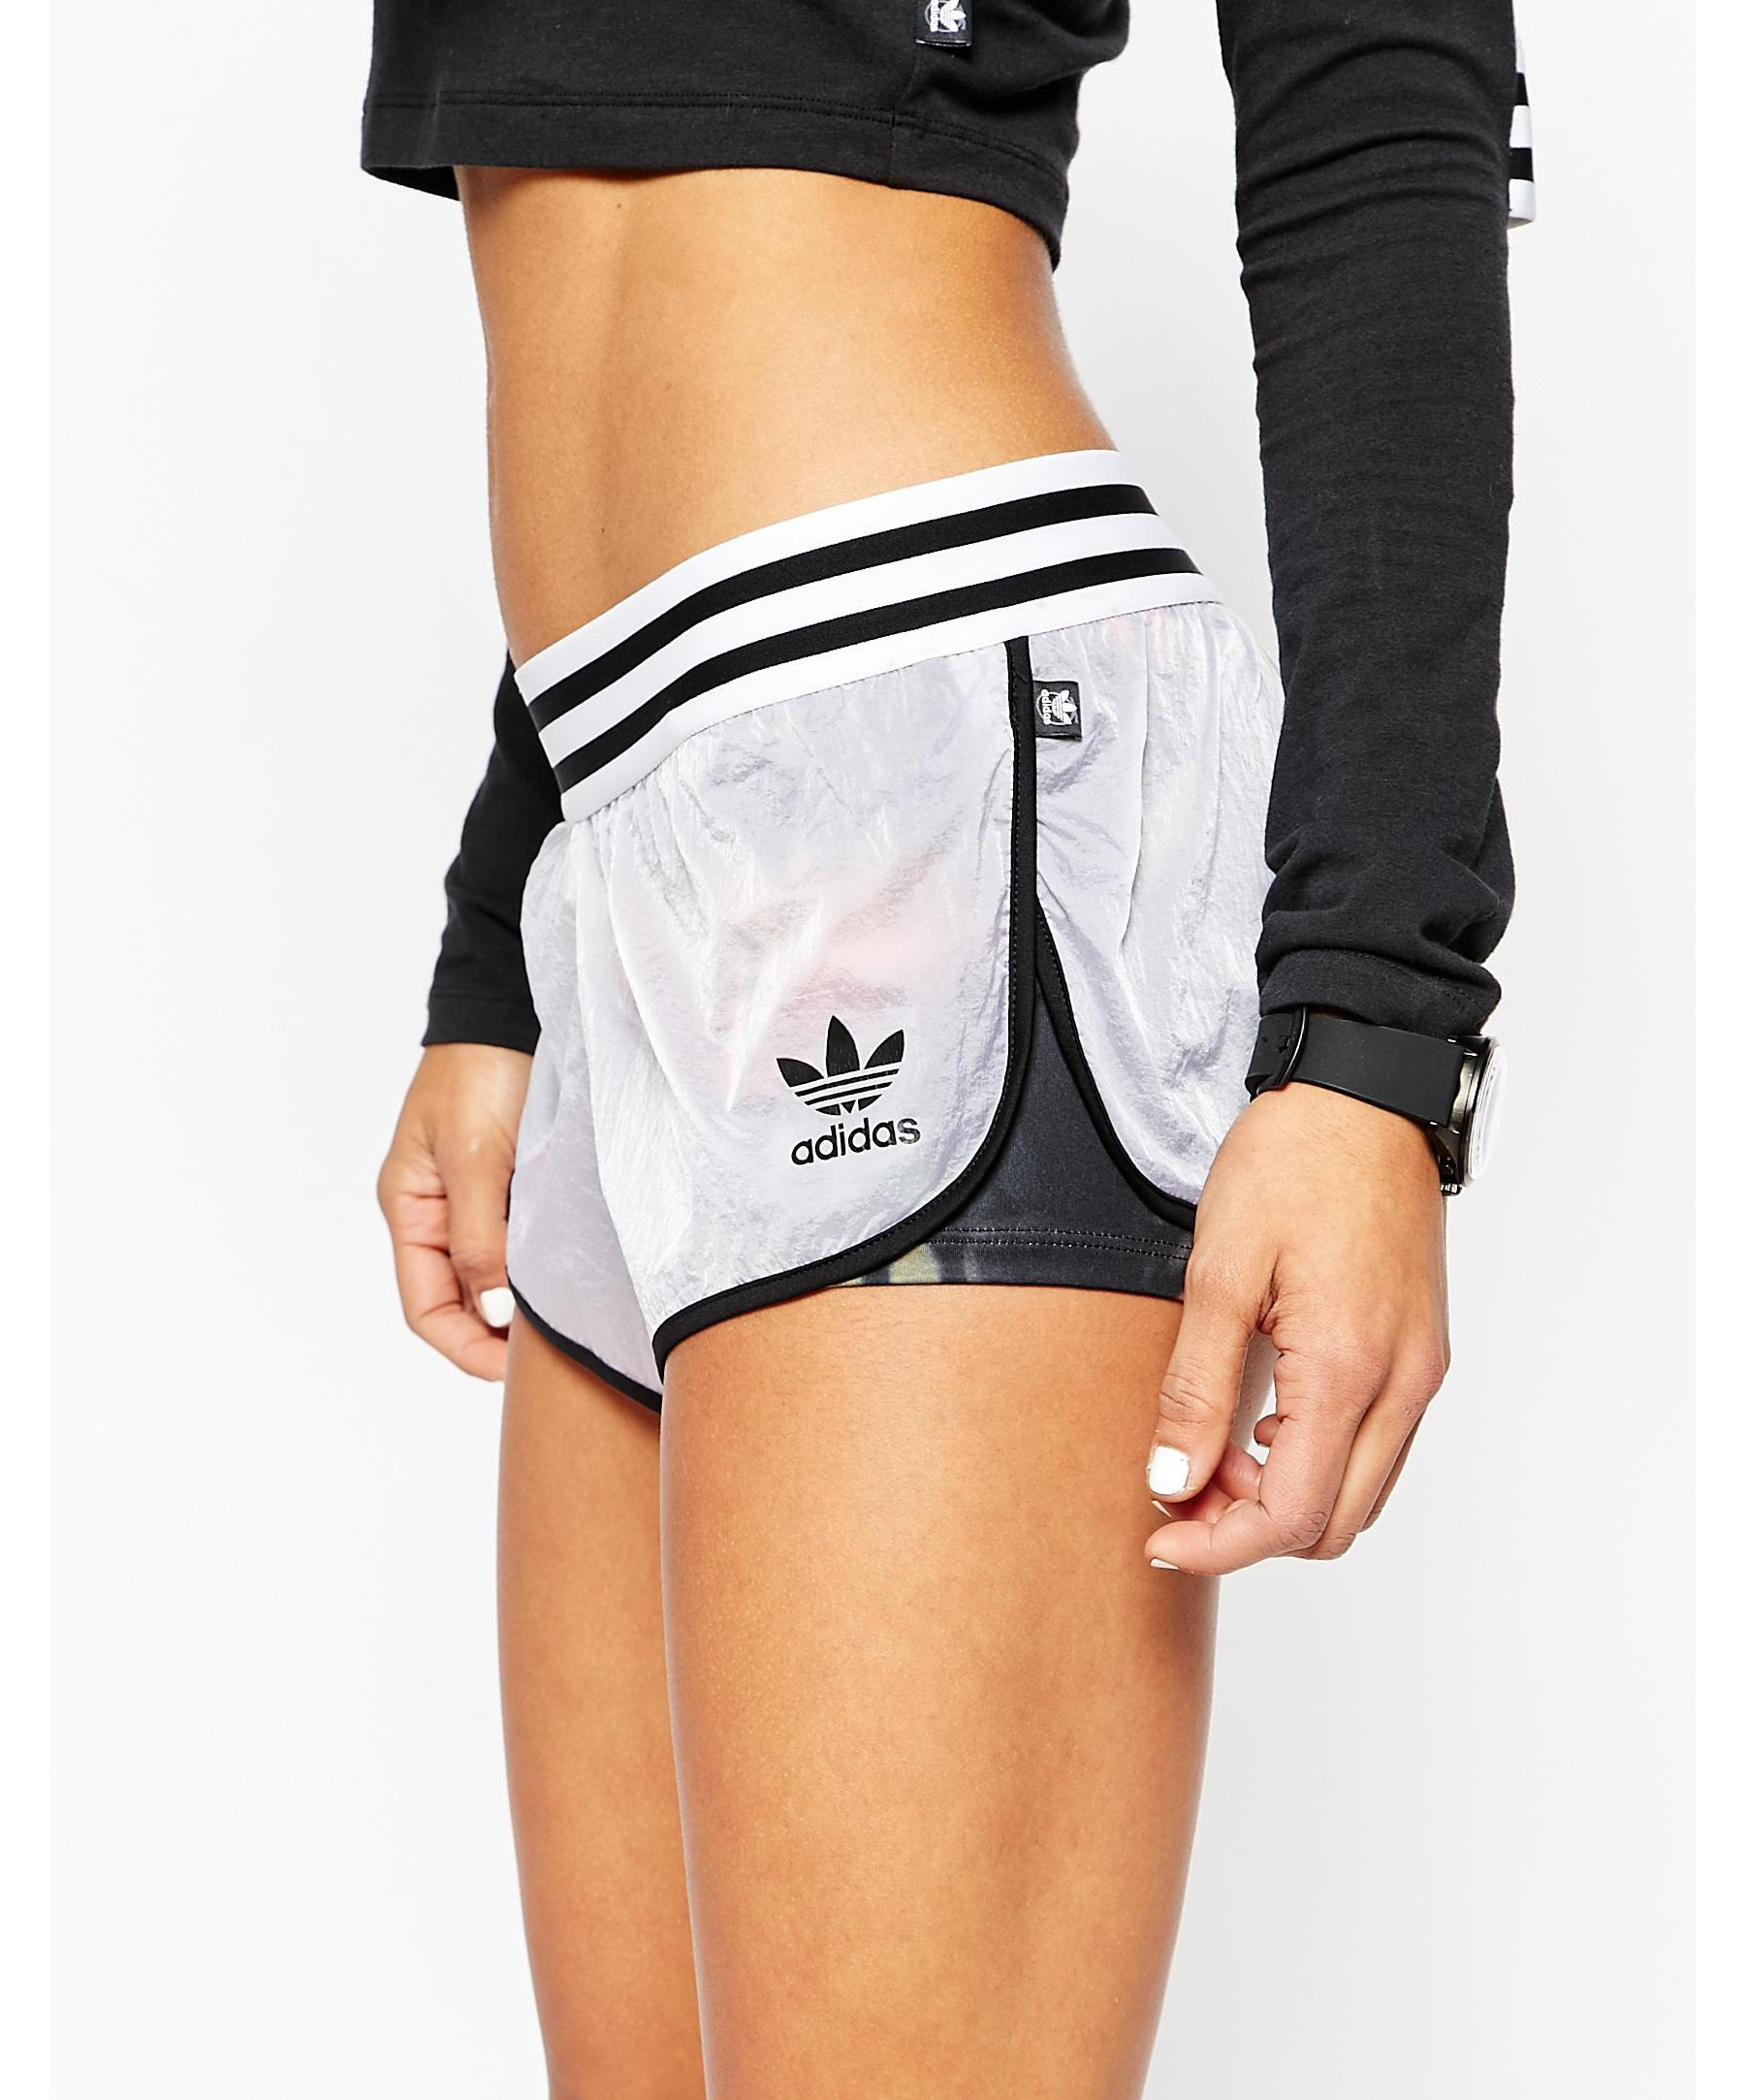 Adidas Originals Rita Ora Shorts In Sheer Layer Fabric